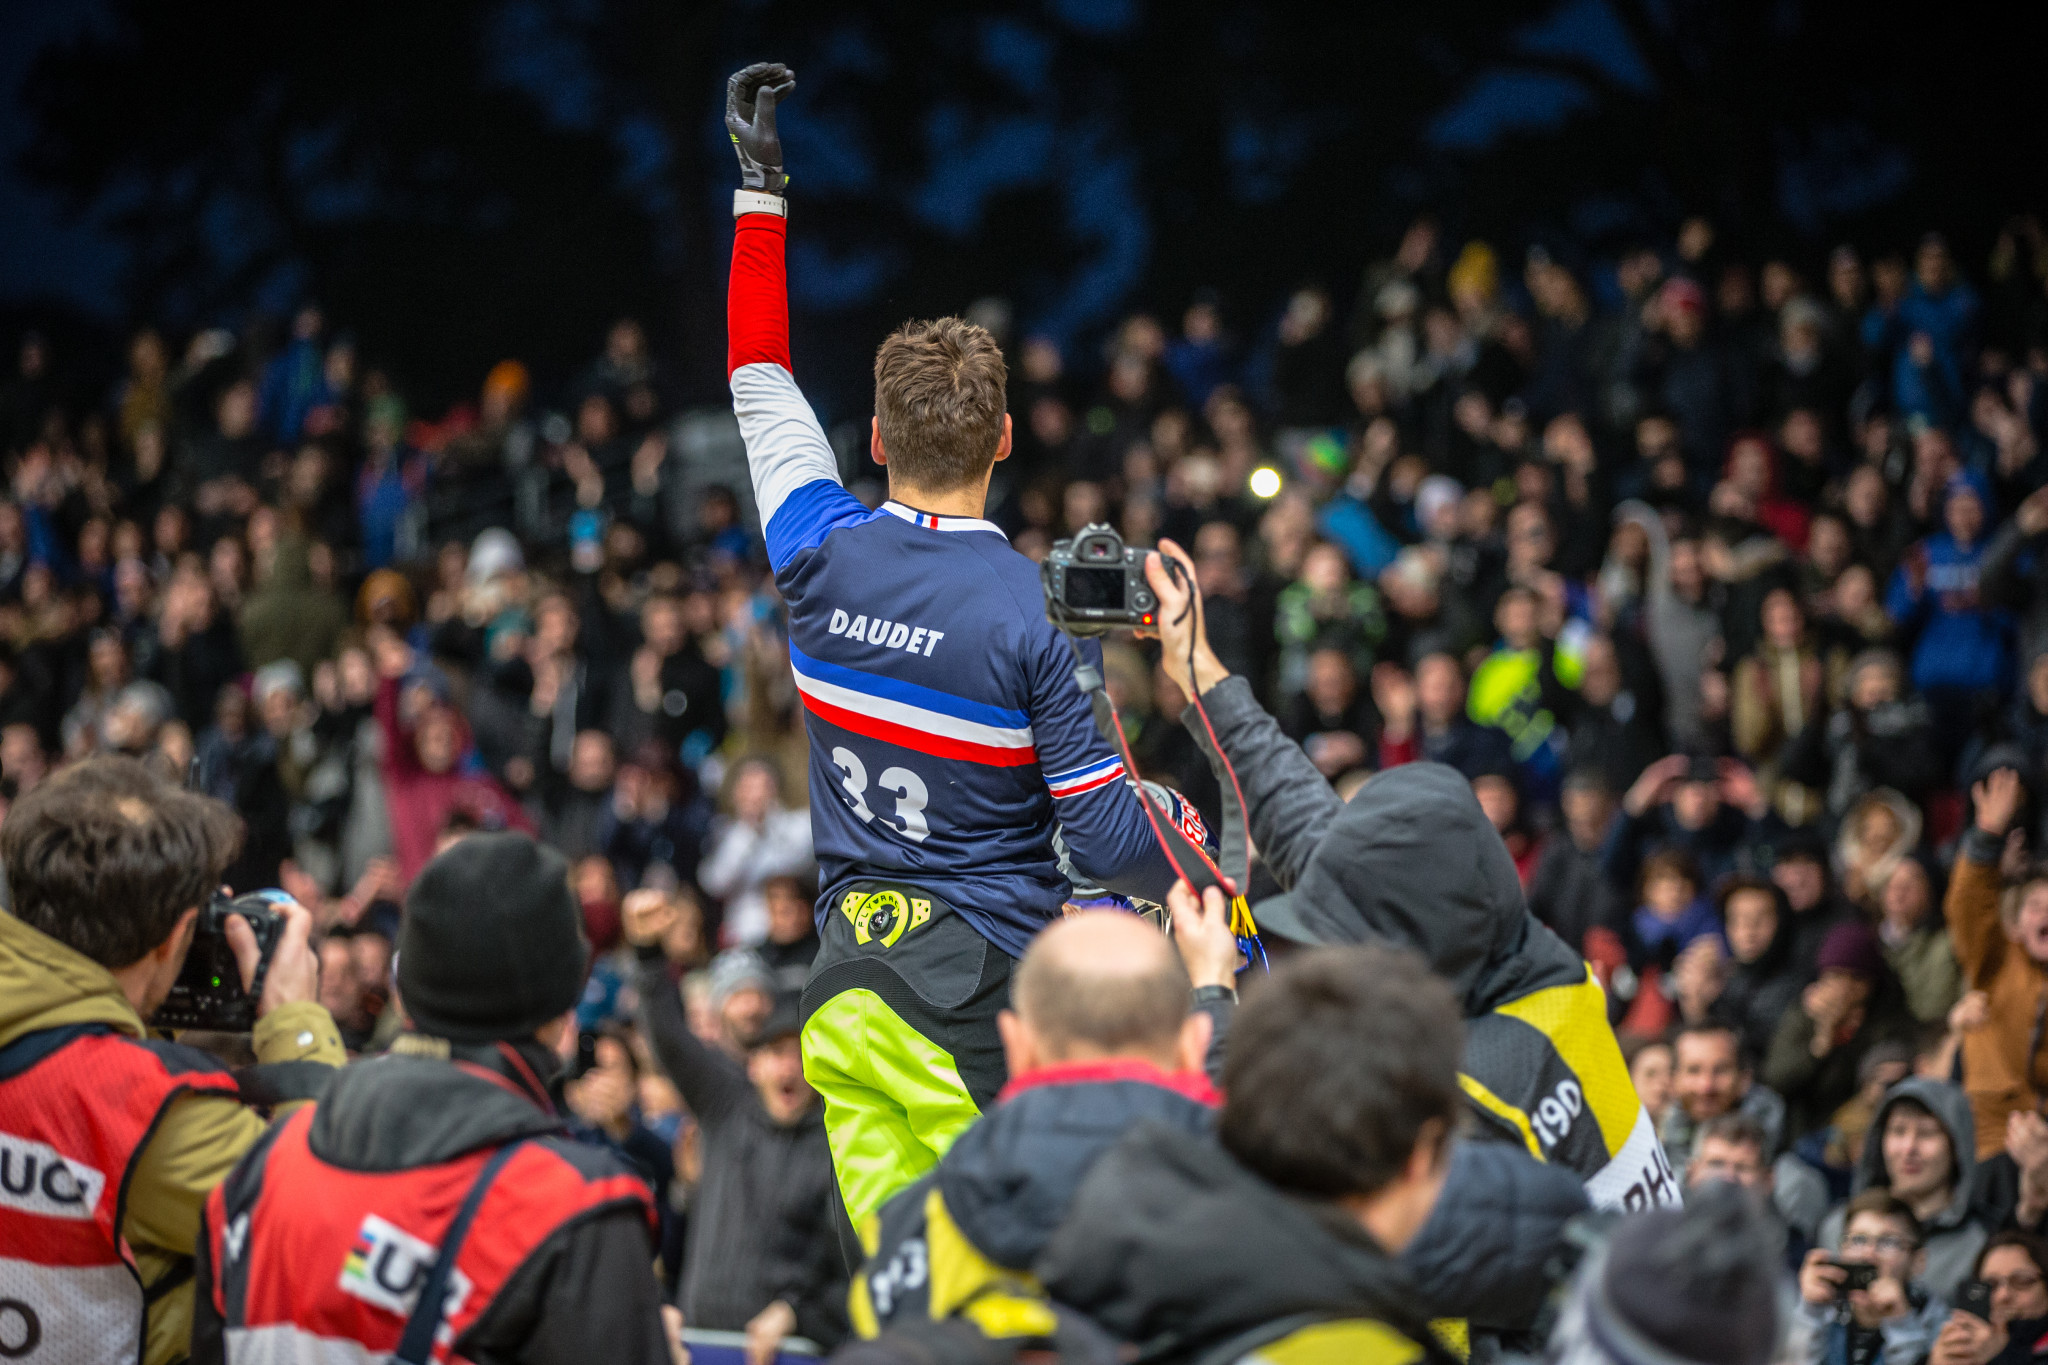 Daudet and Kimmann set for UCI BMX Supercross World Cup battle in France